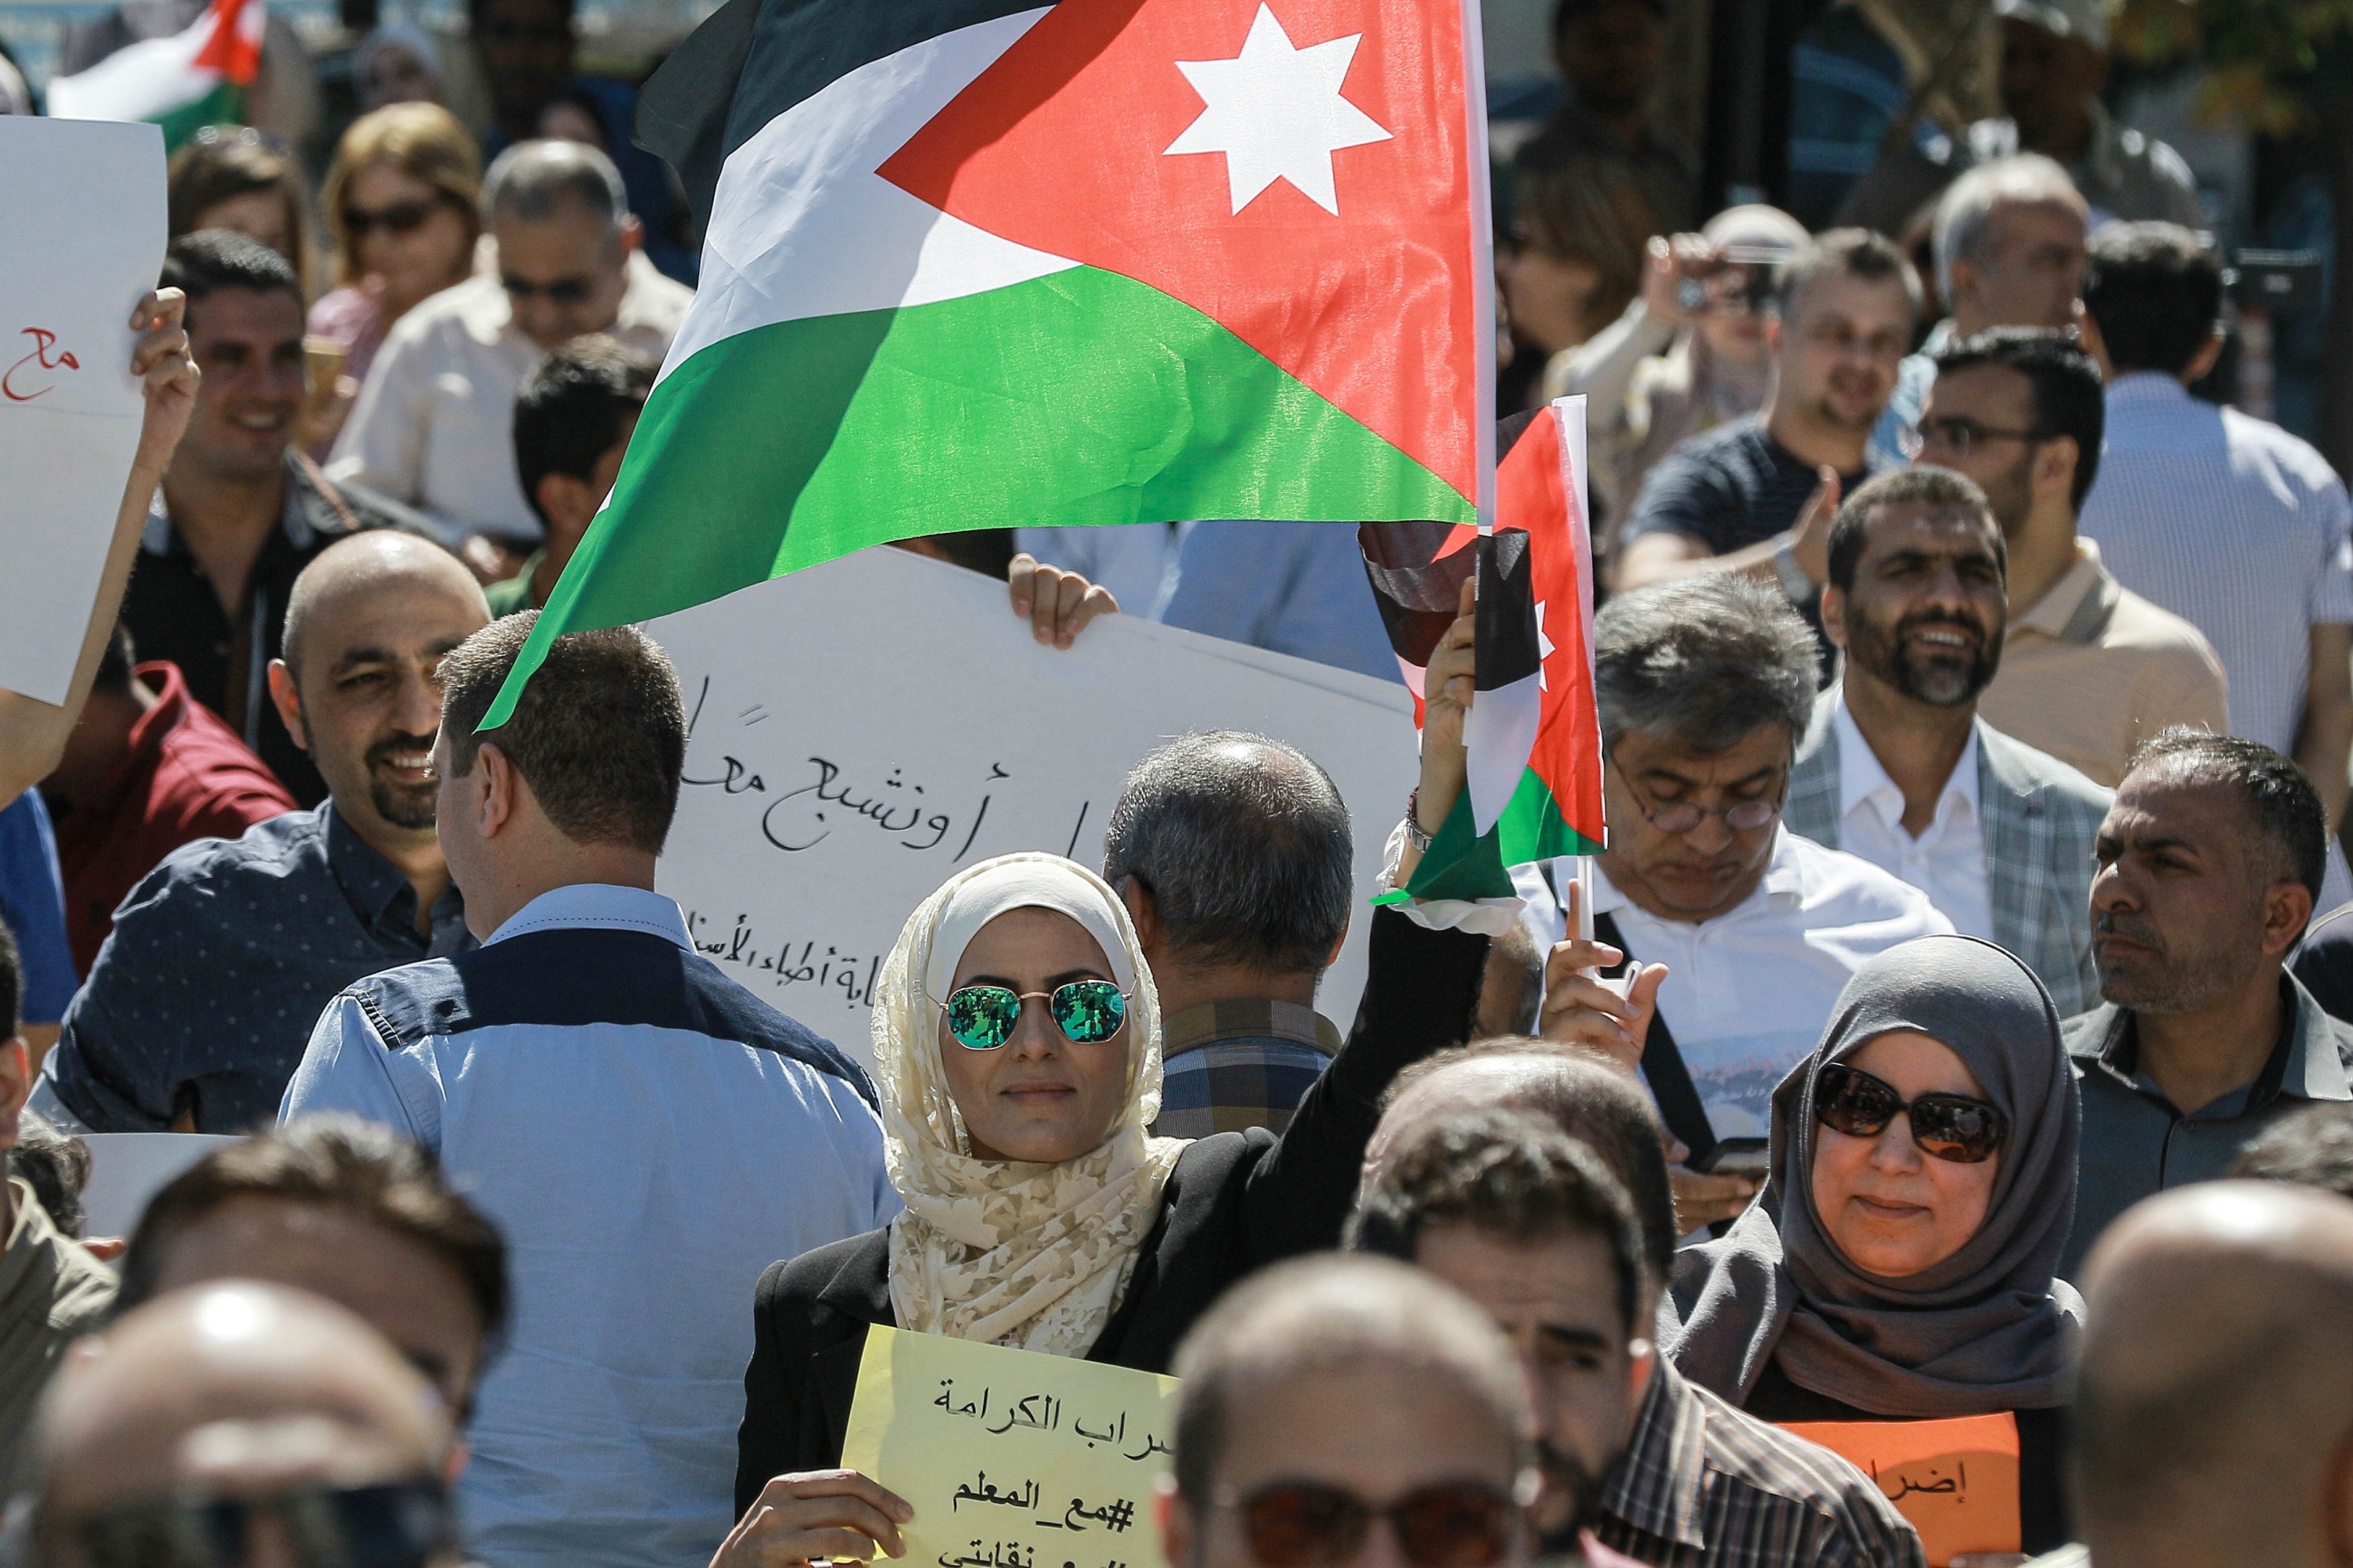 The teachers' union went on strike last year, shutting down schools across Jordan for a month